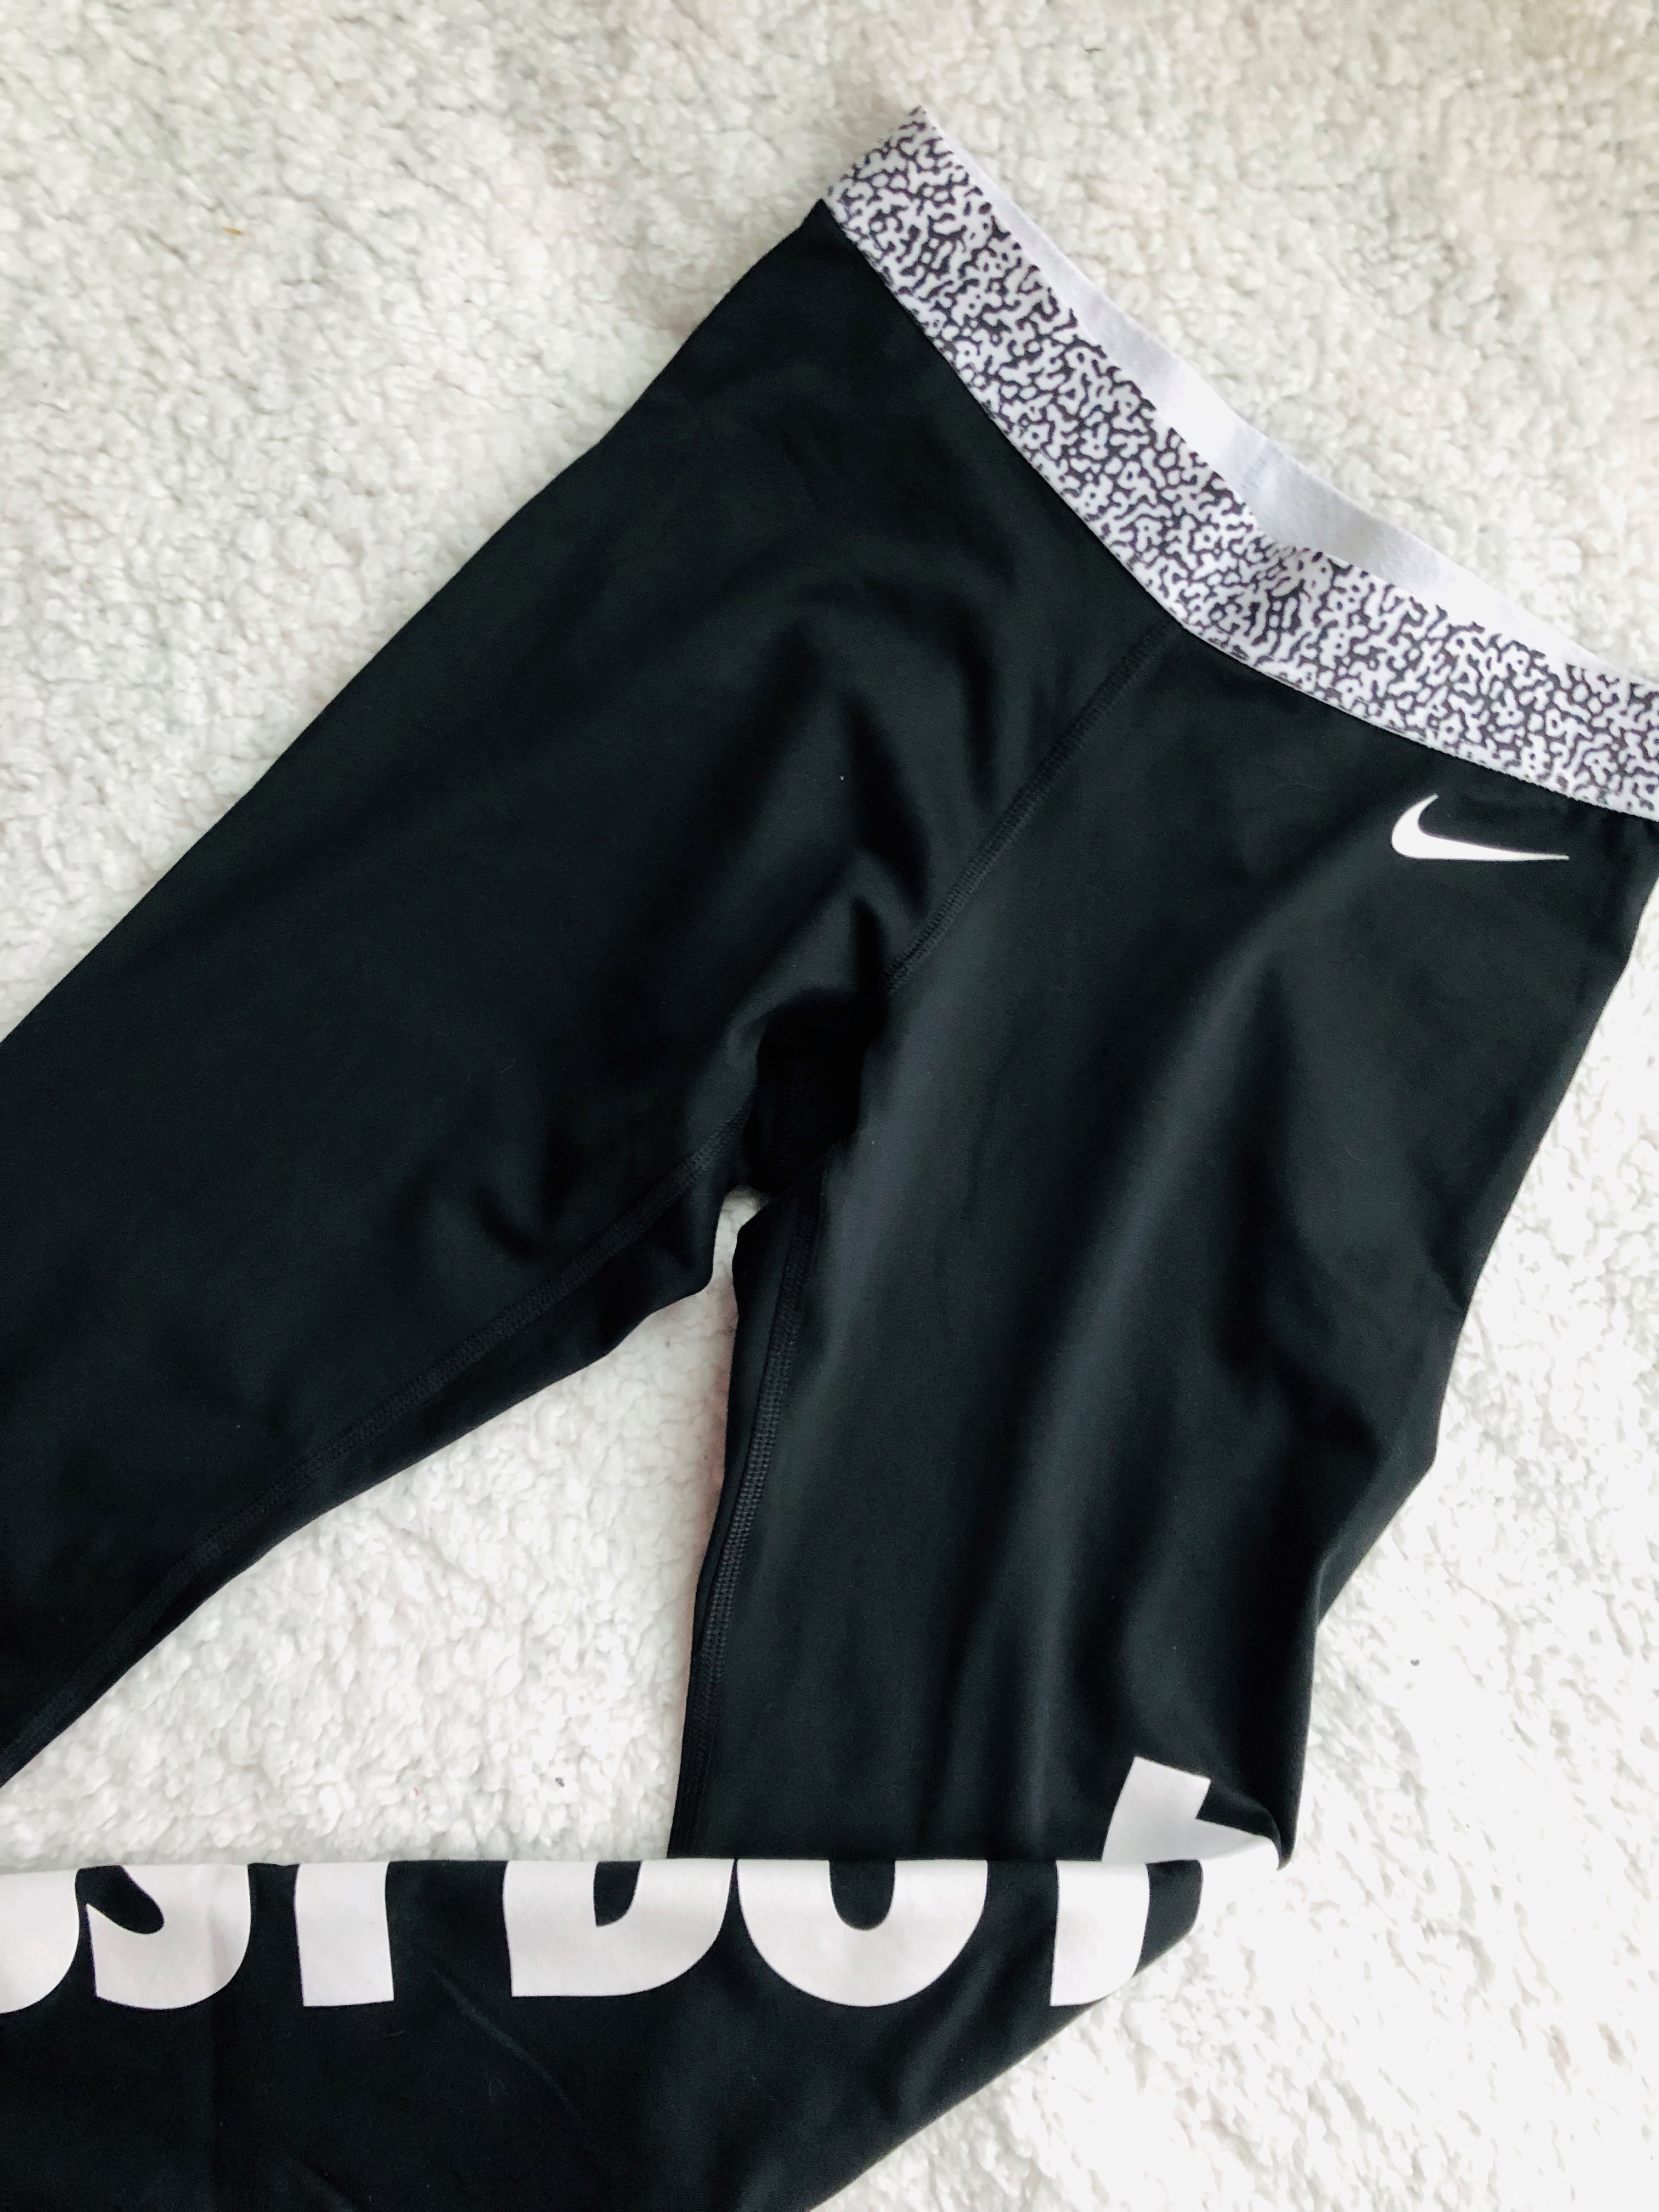 Black Nike sweatpants on a white bed.